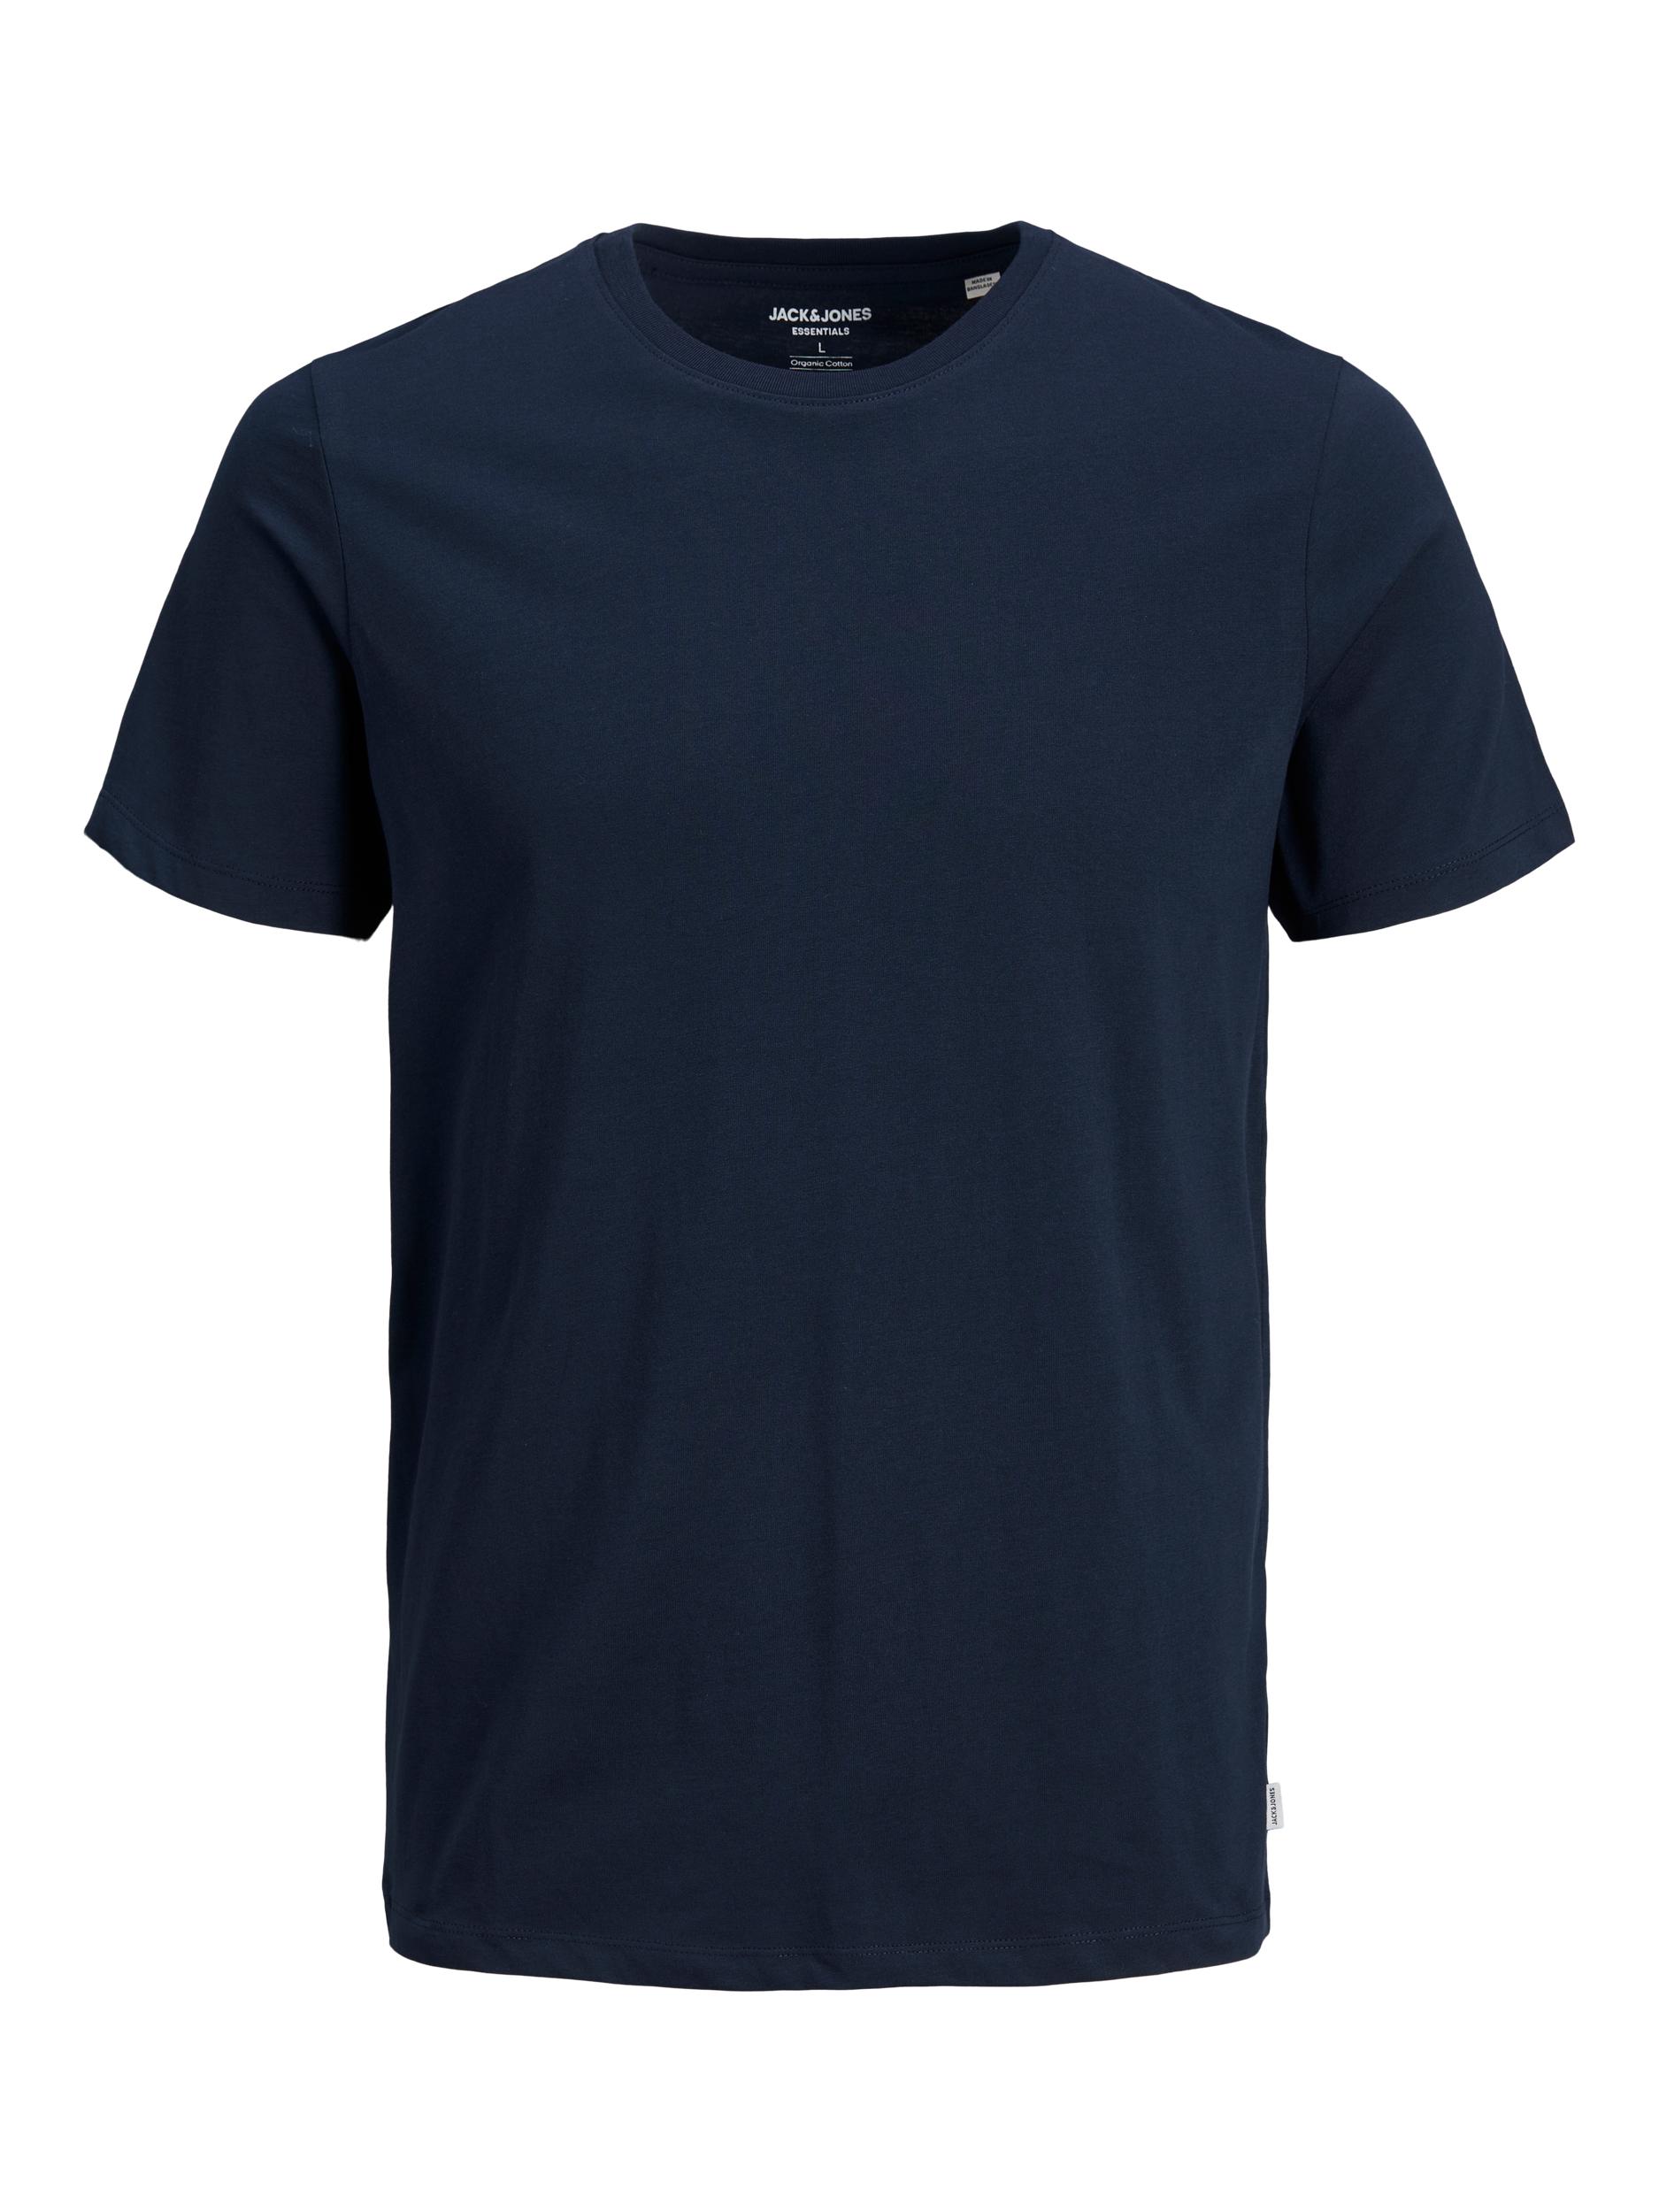 spil presse Mary Jack & Jones - Ensfarvet Økologisk T-Shirt Navy